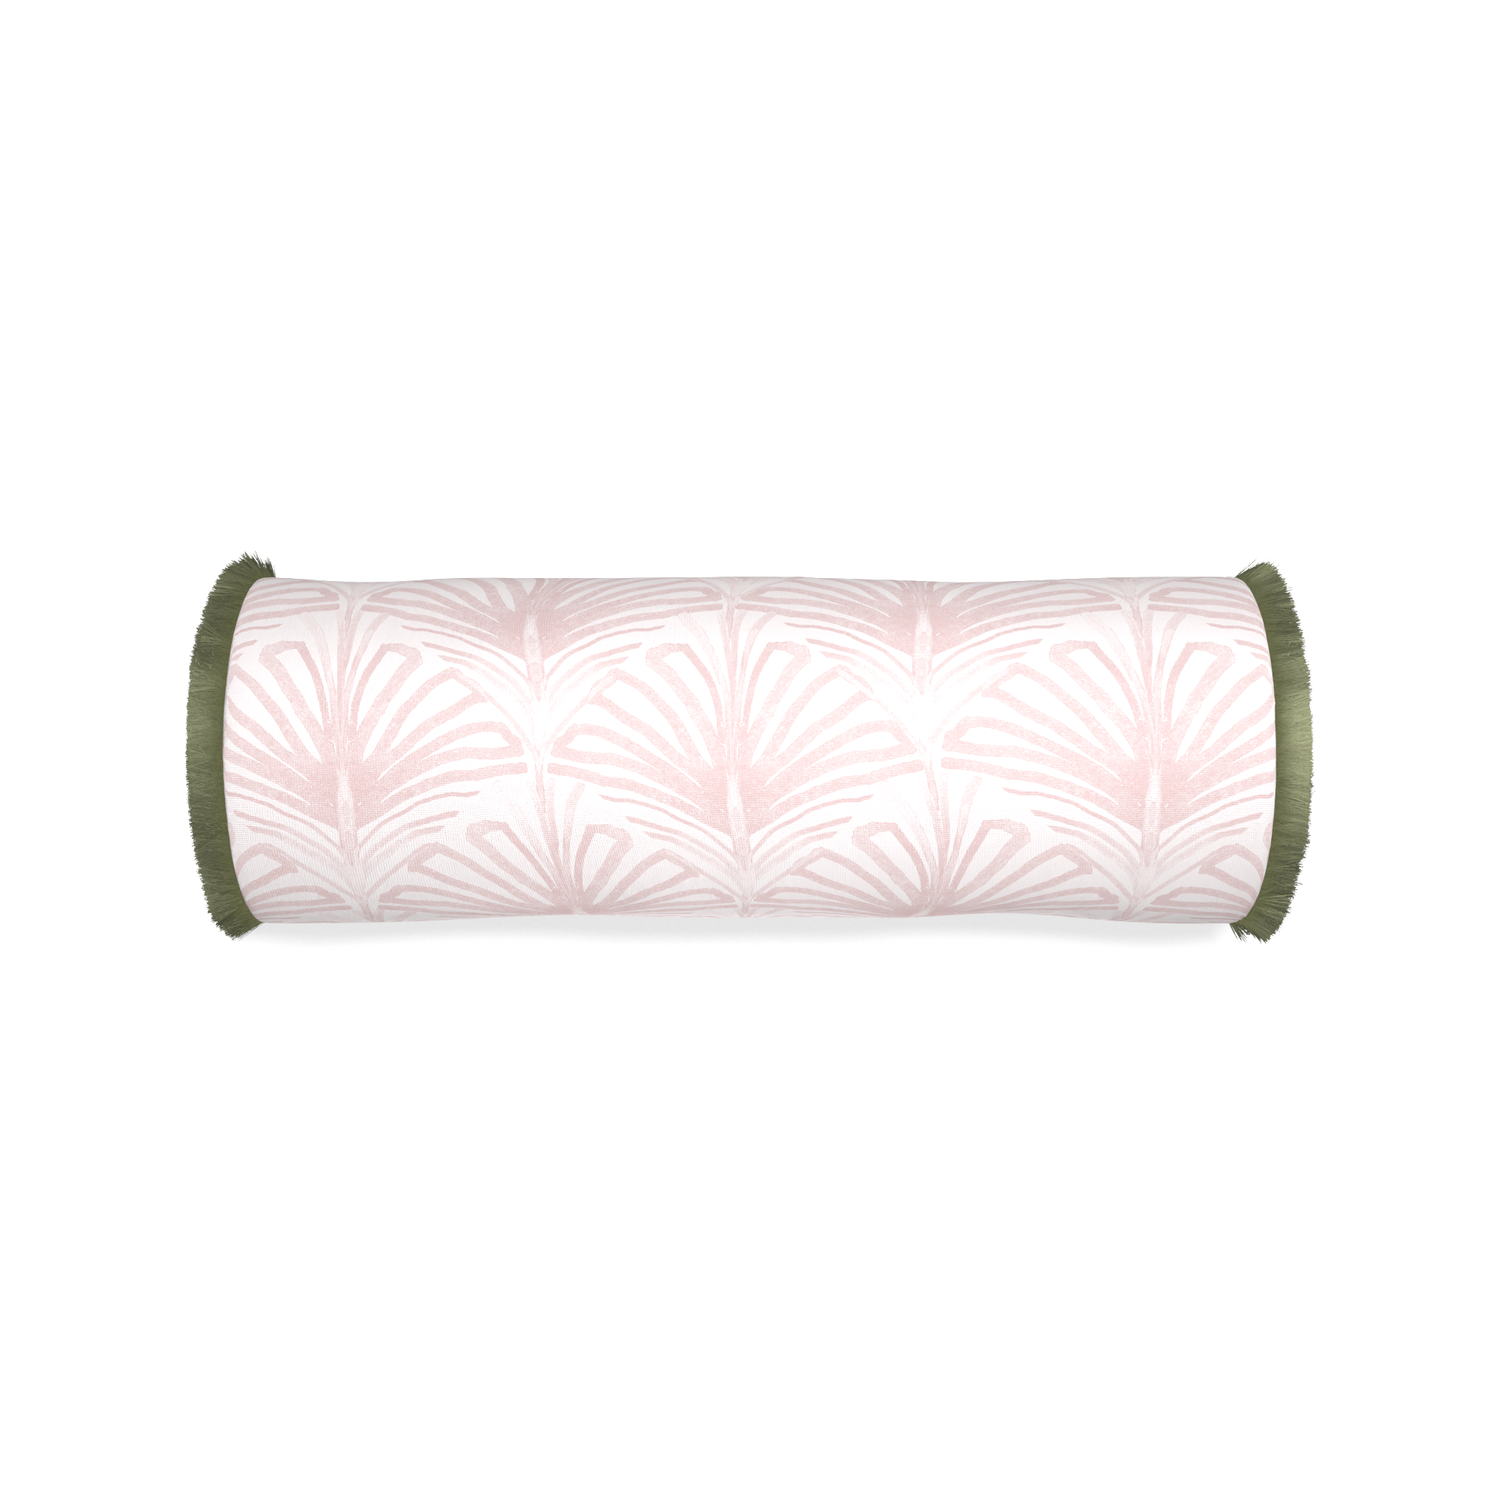 Bolster suzy rose custom pillow with sage fringe on white background